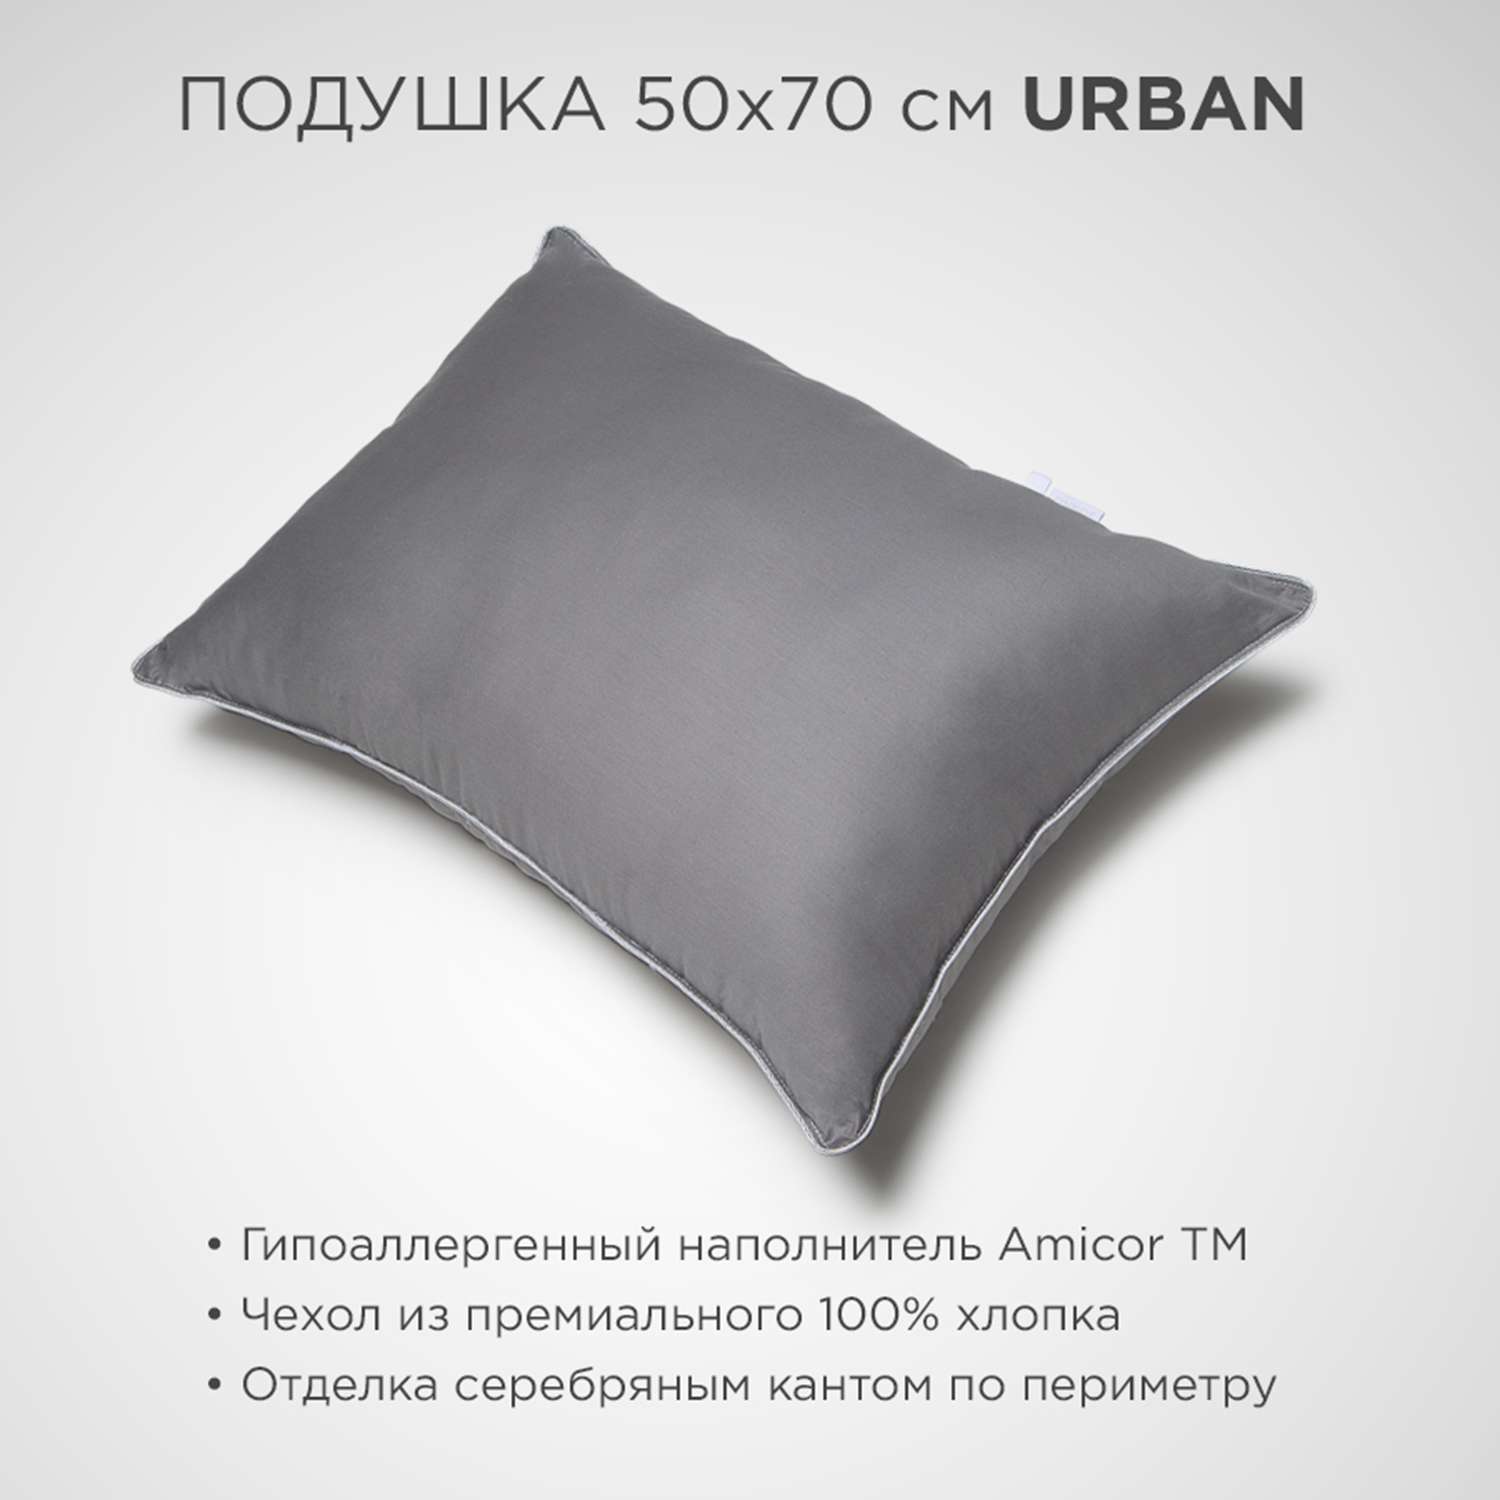 Подушка SONNO URBAN Amicor 50x70 см Матовый графит - фото 2